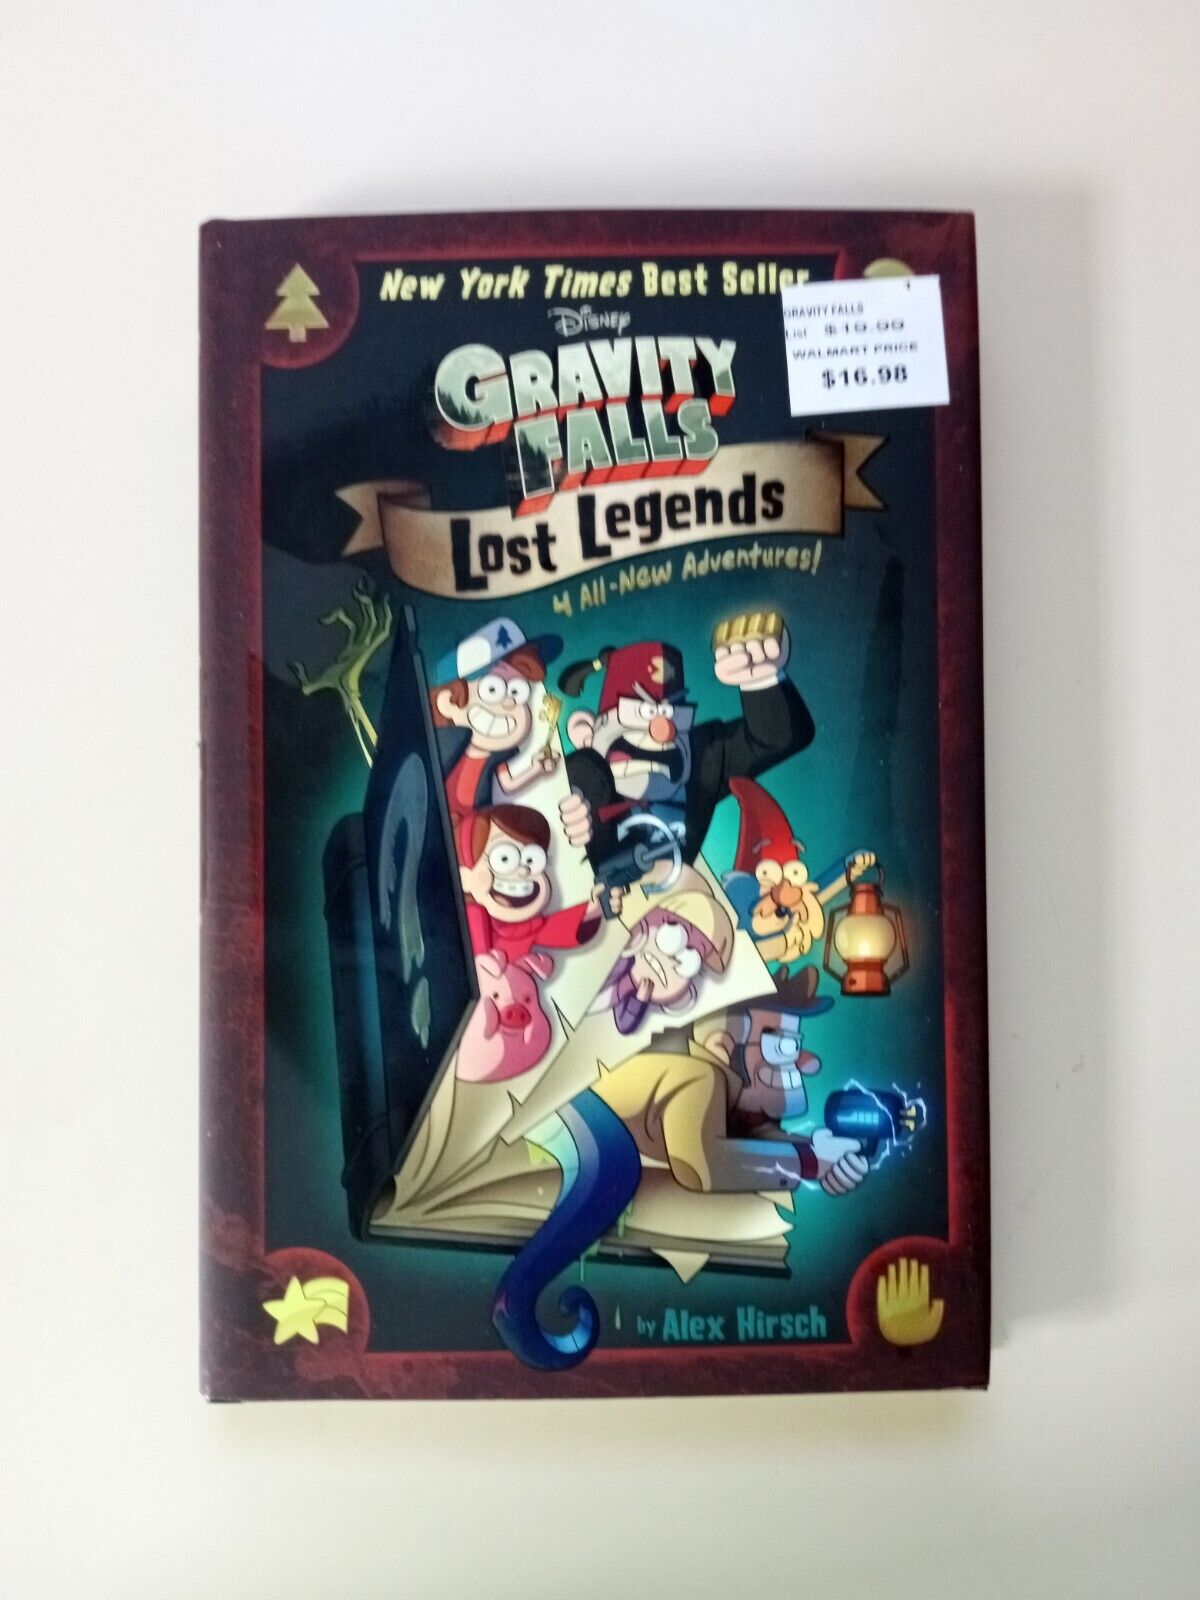 Disney Gravity Falls: Lost Legends (Disney, July 2018)